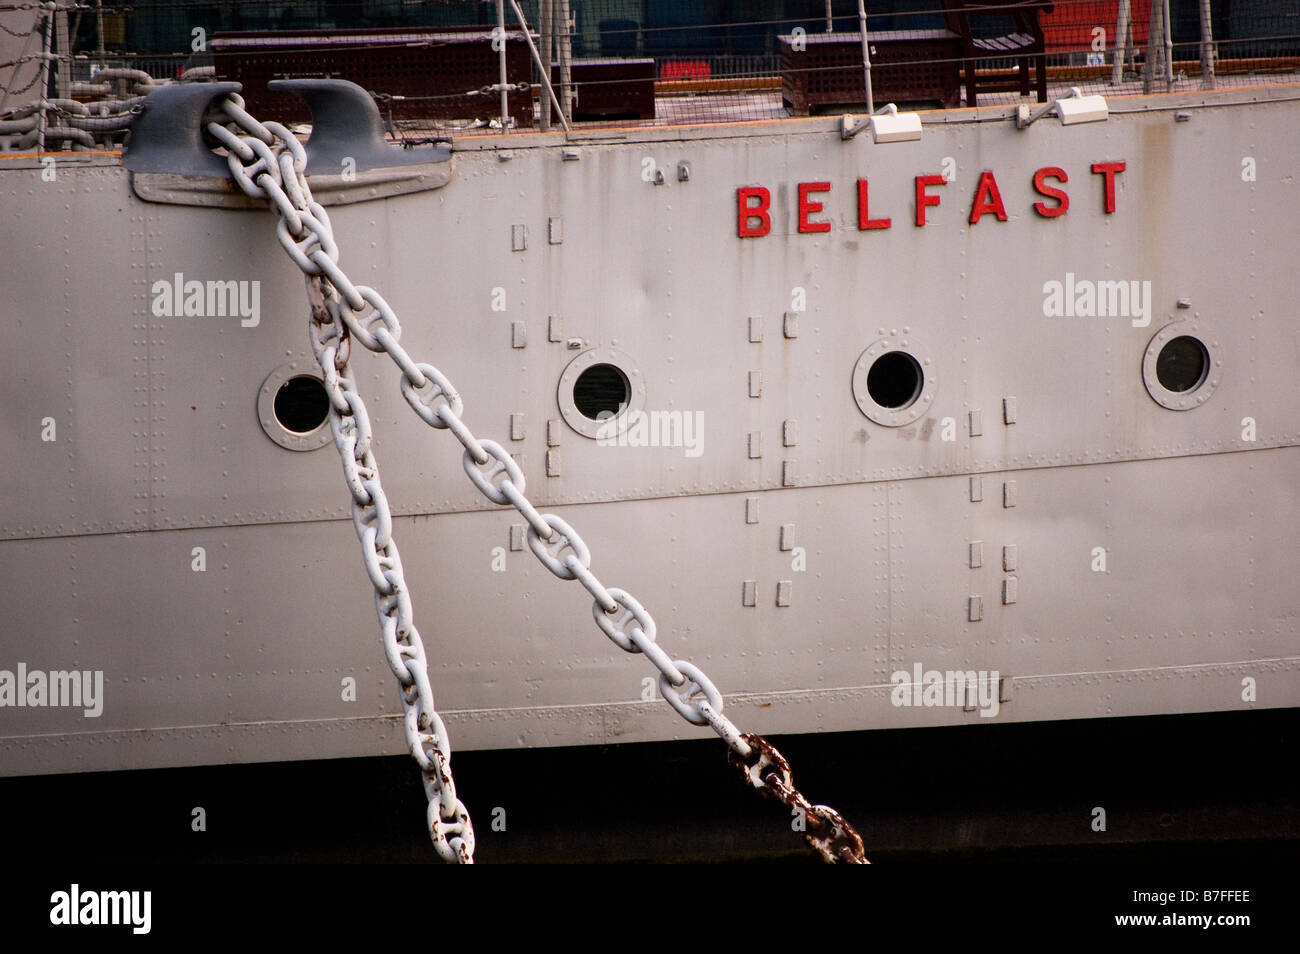 Stern of HMS Belfast Stock Photo